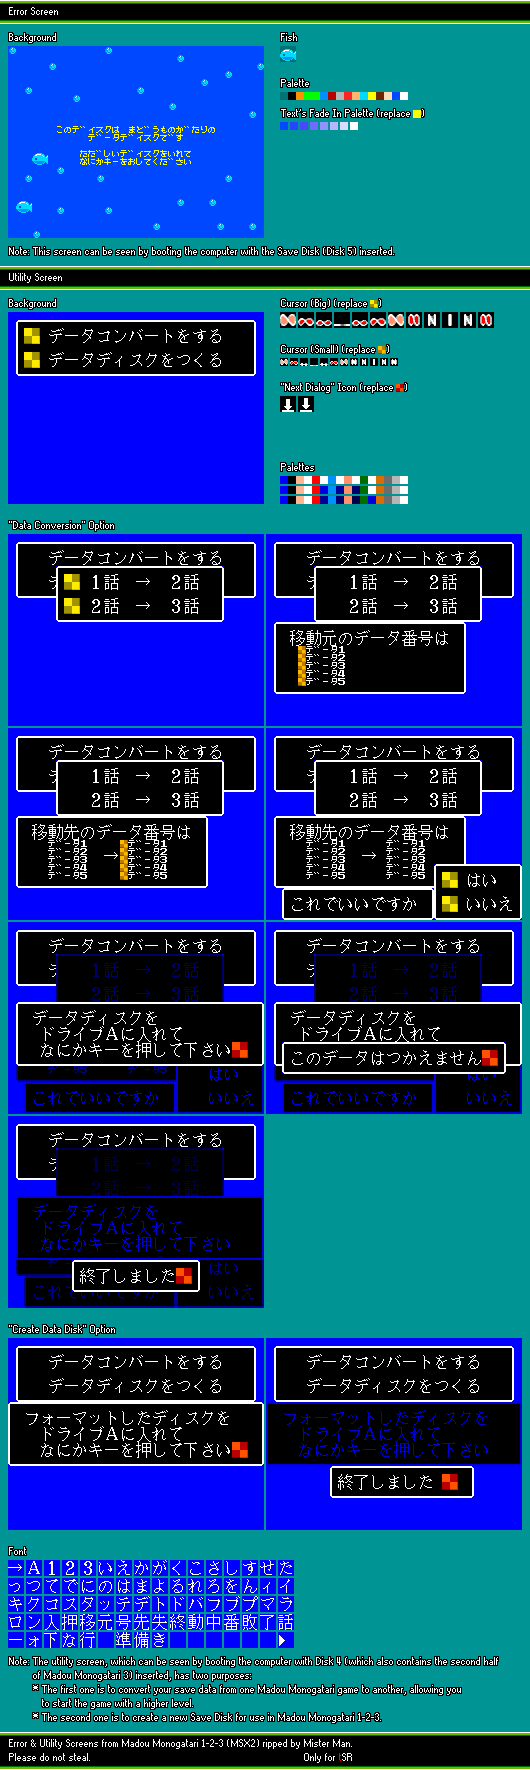 Madou Monogatari 2 (MSX2) - Error & Utility Screens